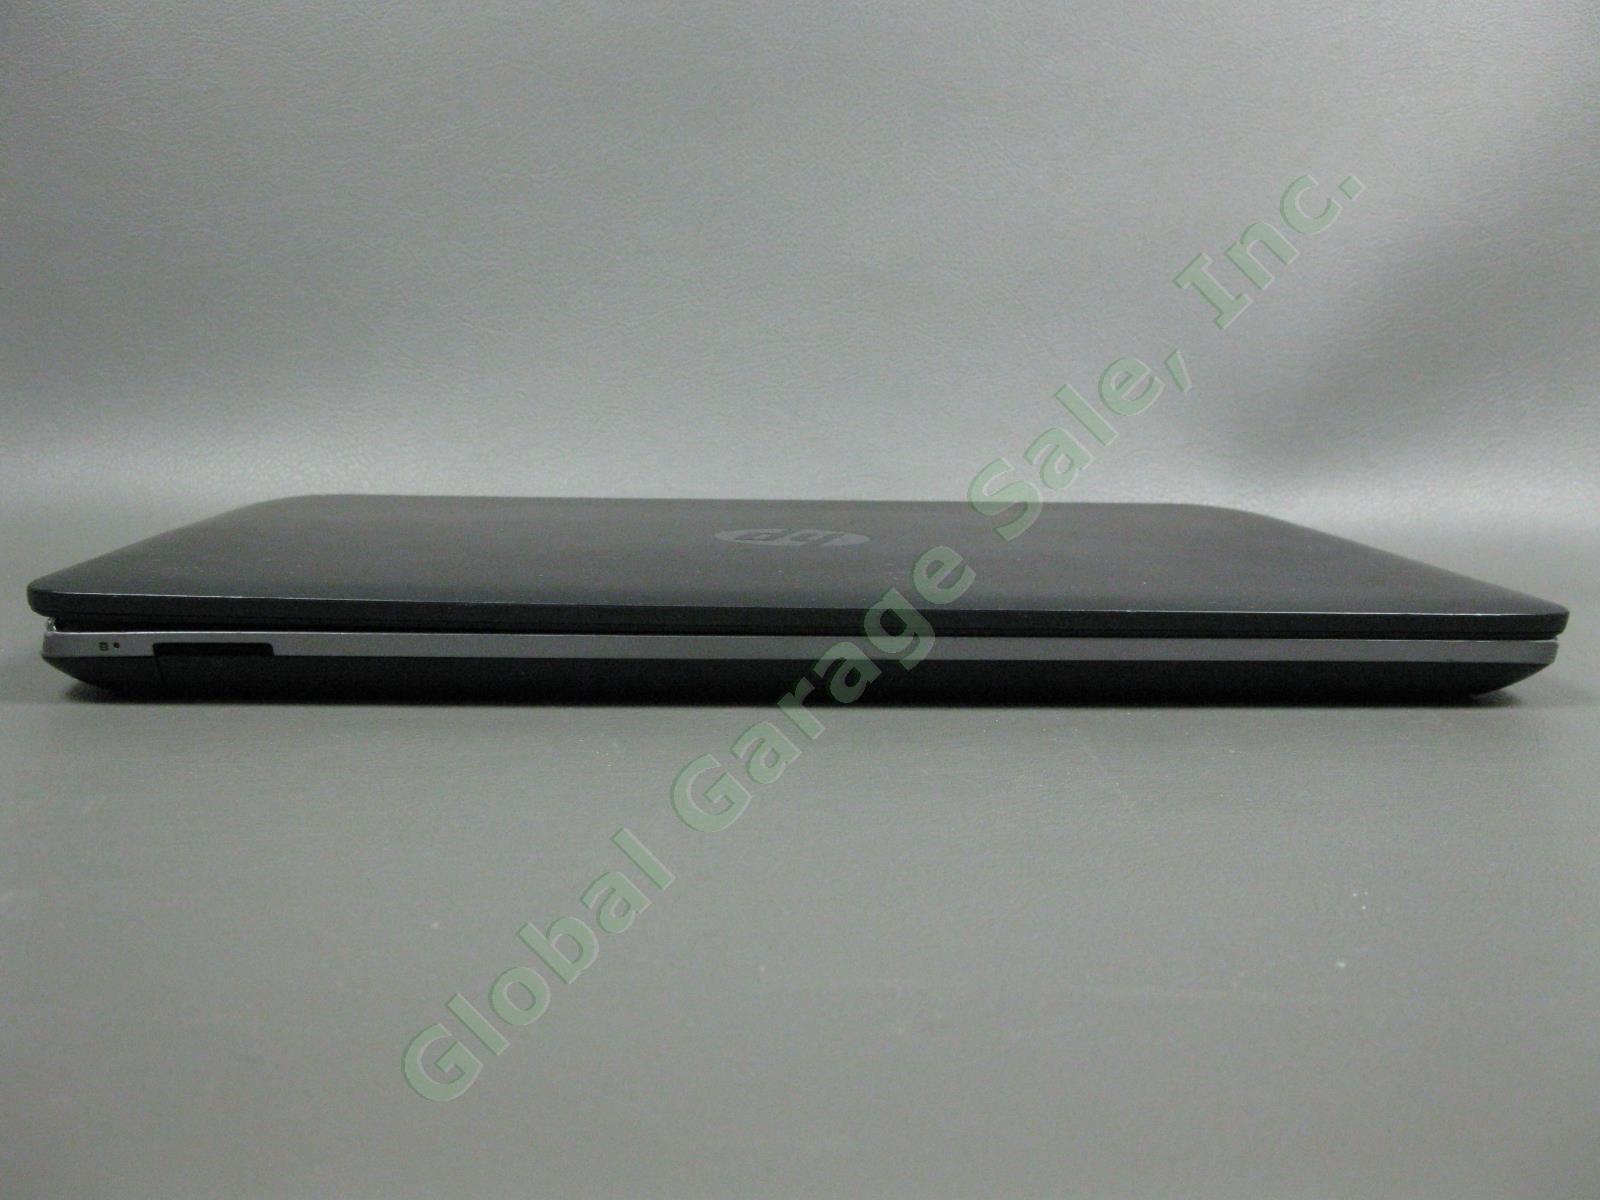 HP ProBook Black Laptop 440 G2 i5-5200U 2.20GHz 4GB RAM 460GB HD Windows 10 Pro 4